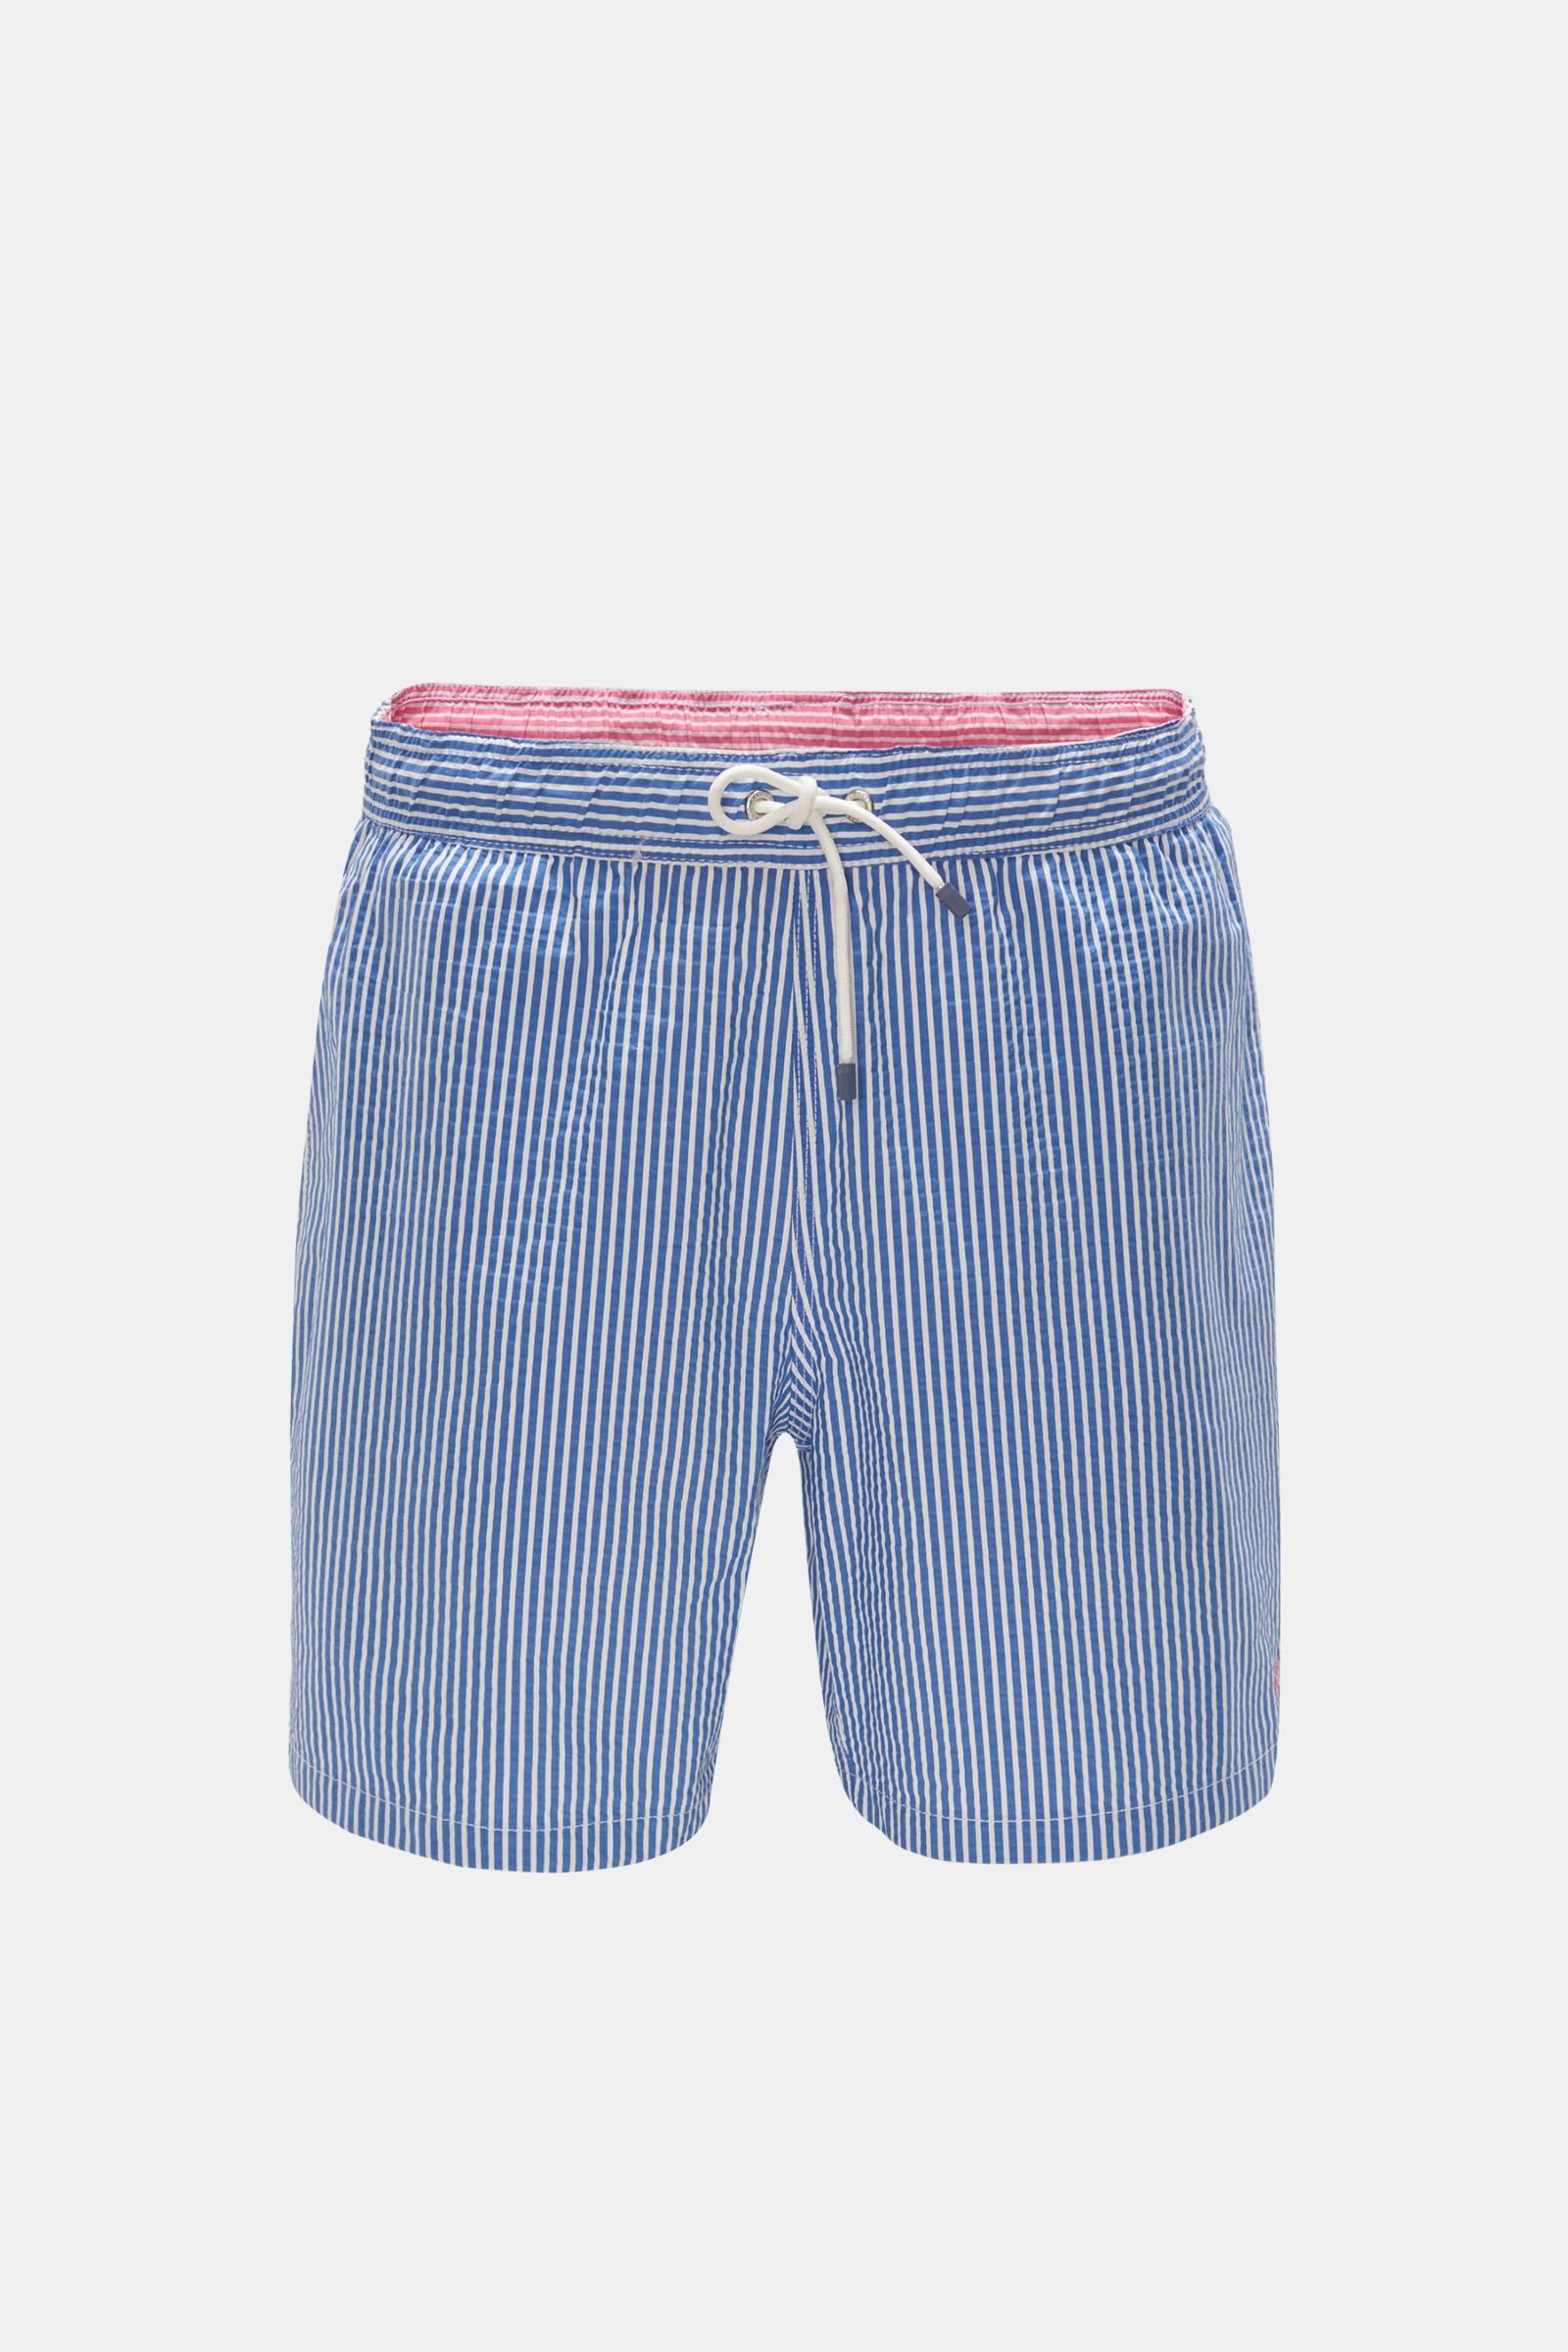 Seersucker swim shorts smoky blue/white striped